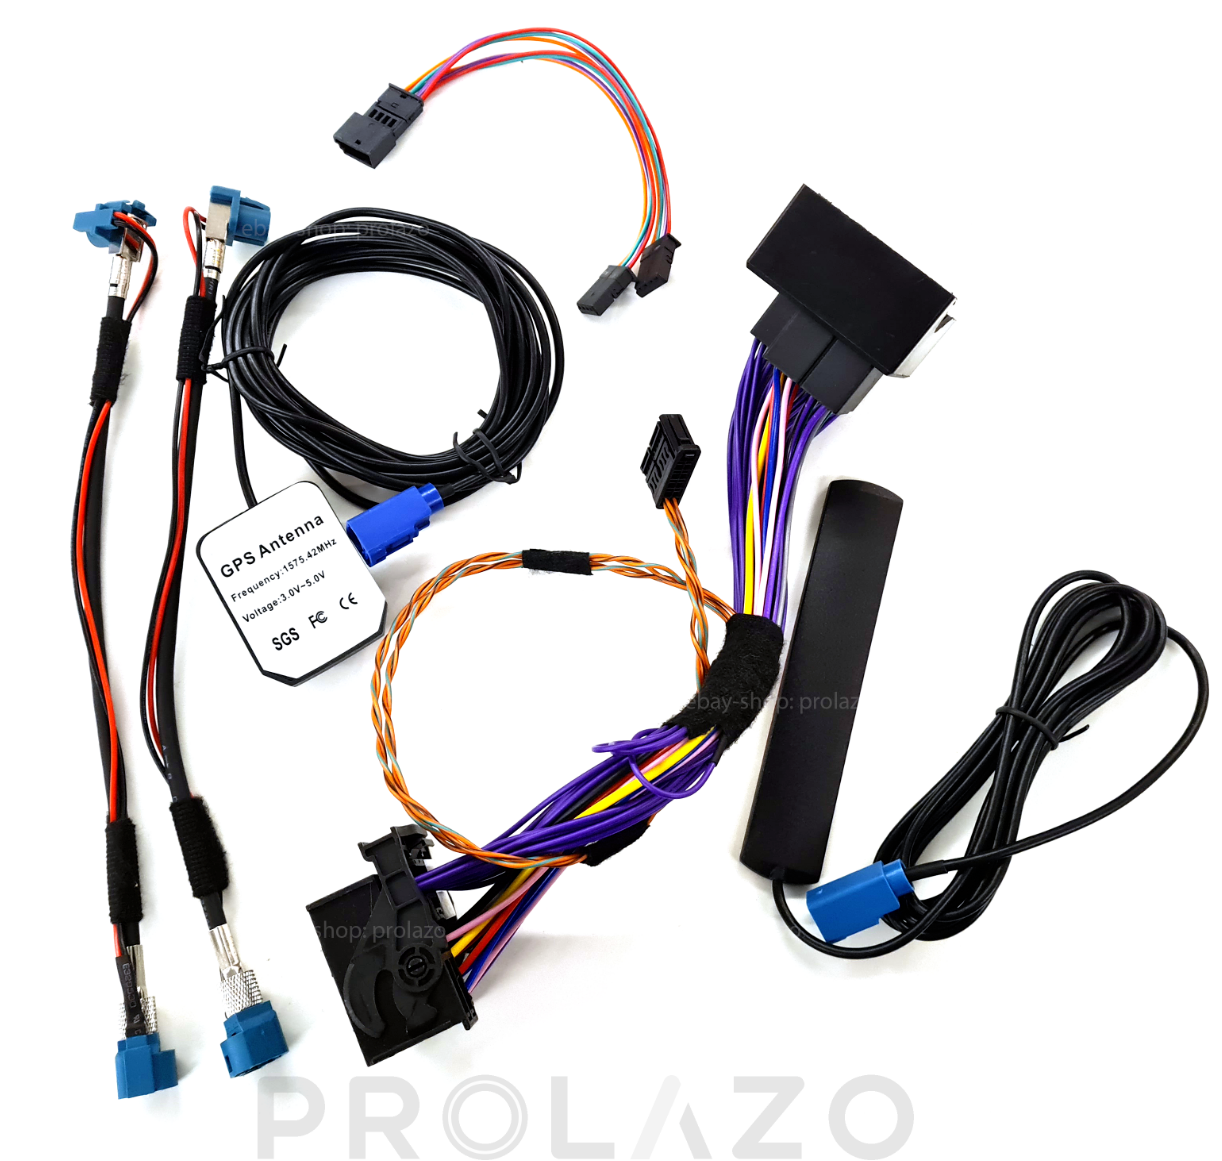 Cable and antenna set for BMW HU-ENTRY to EVO retrofit upgrade - prolazo